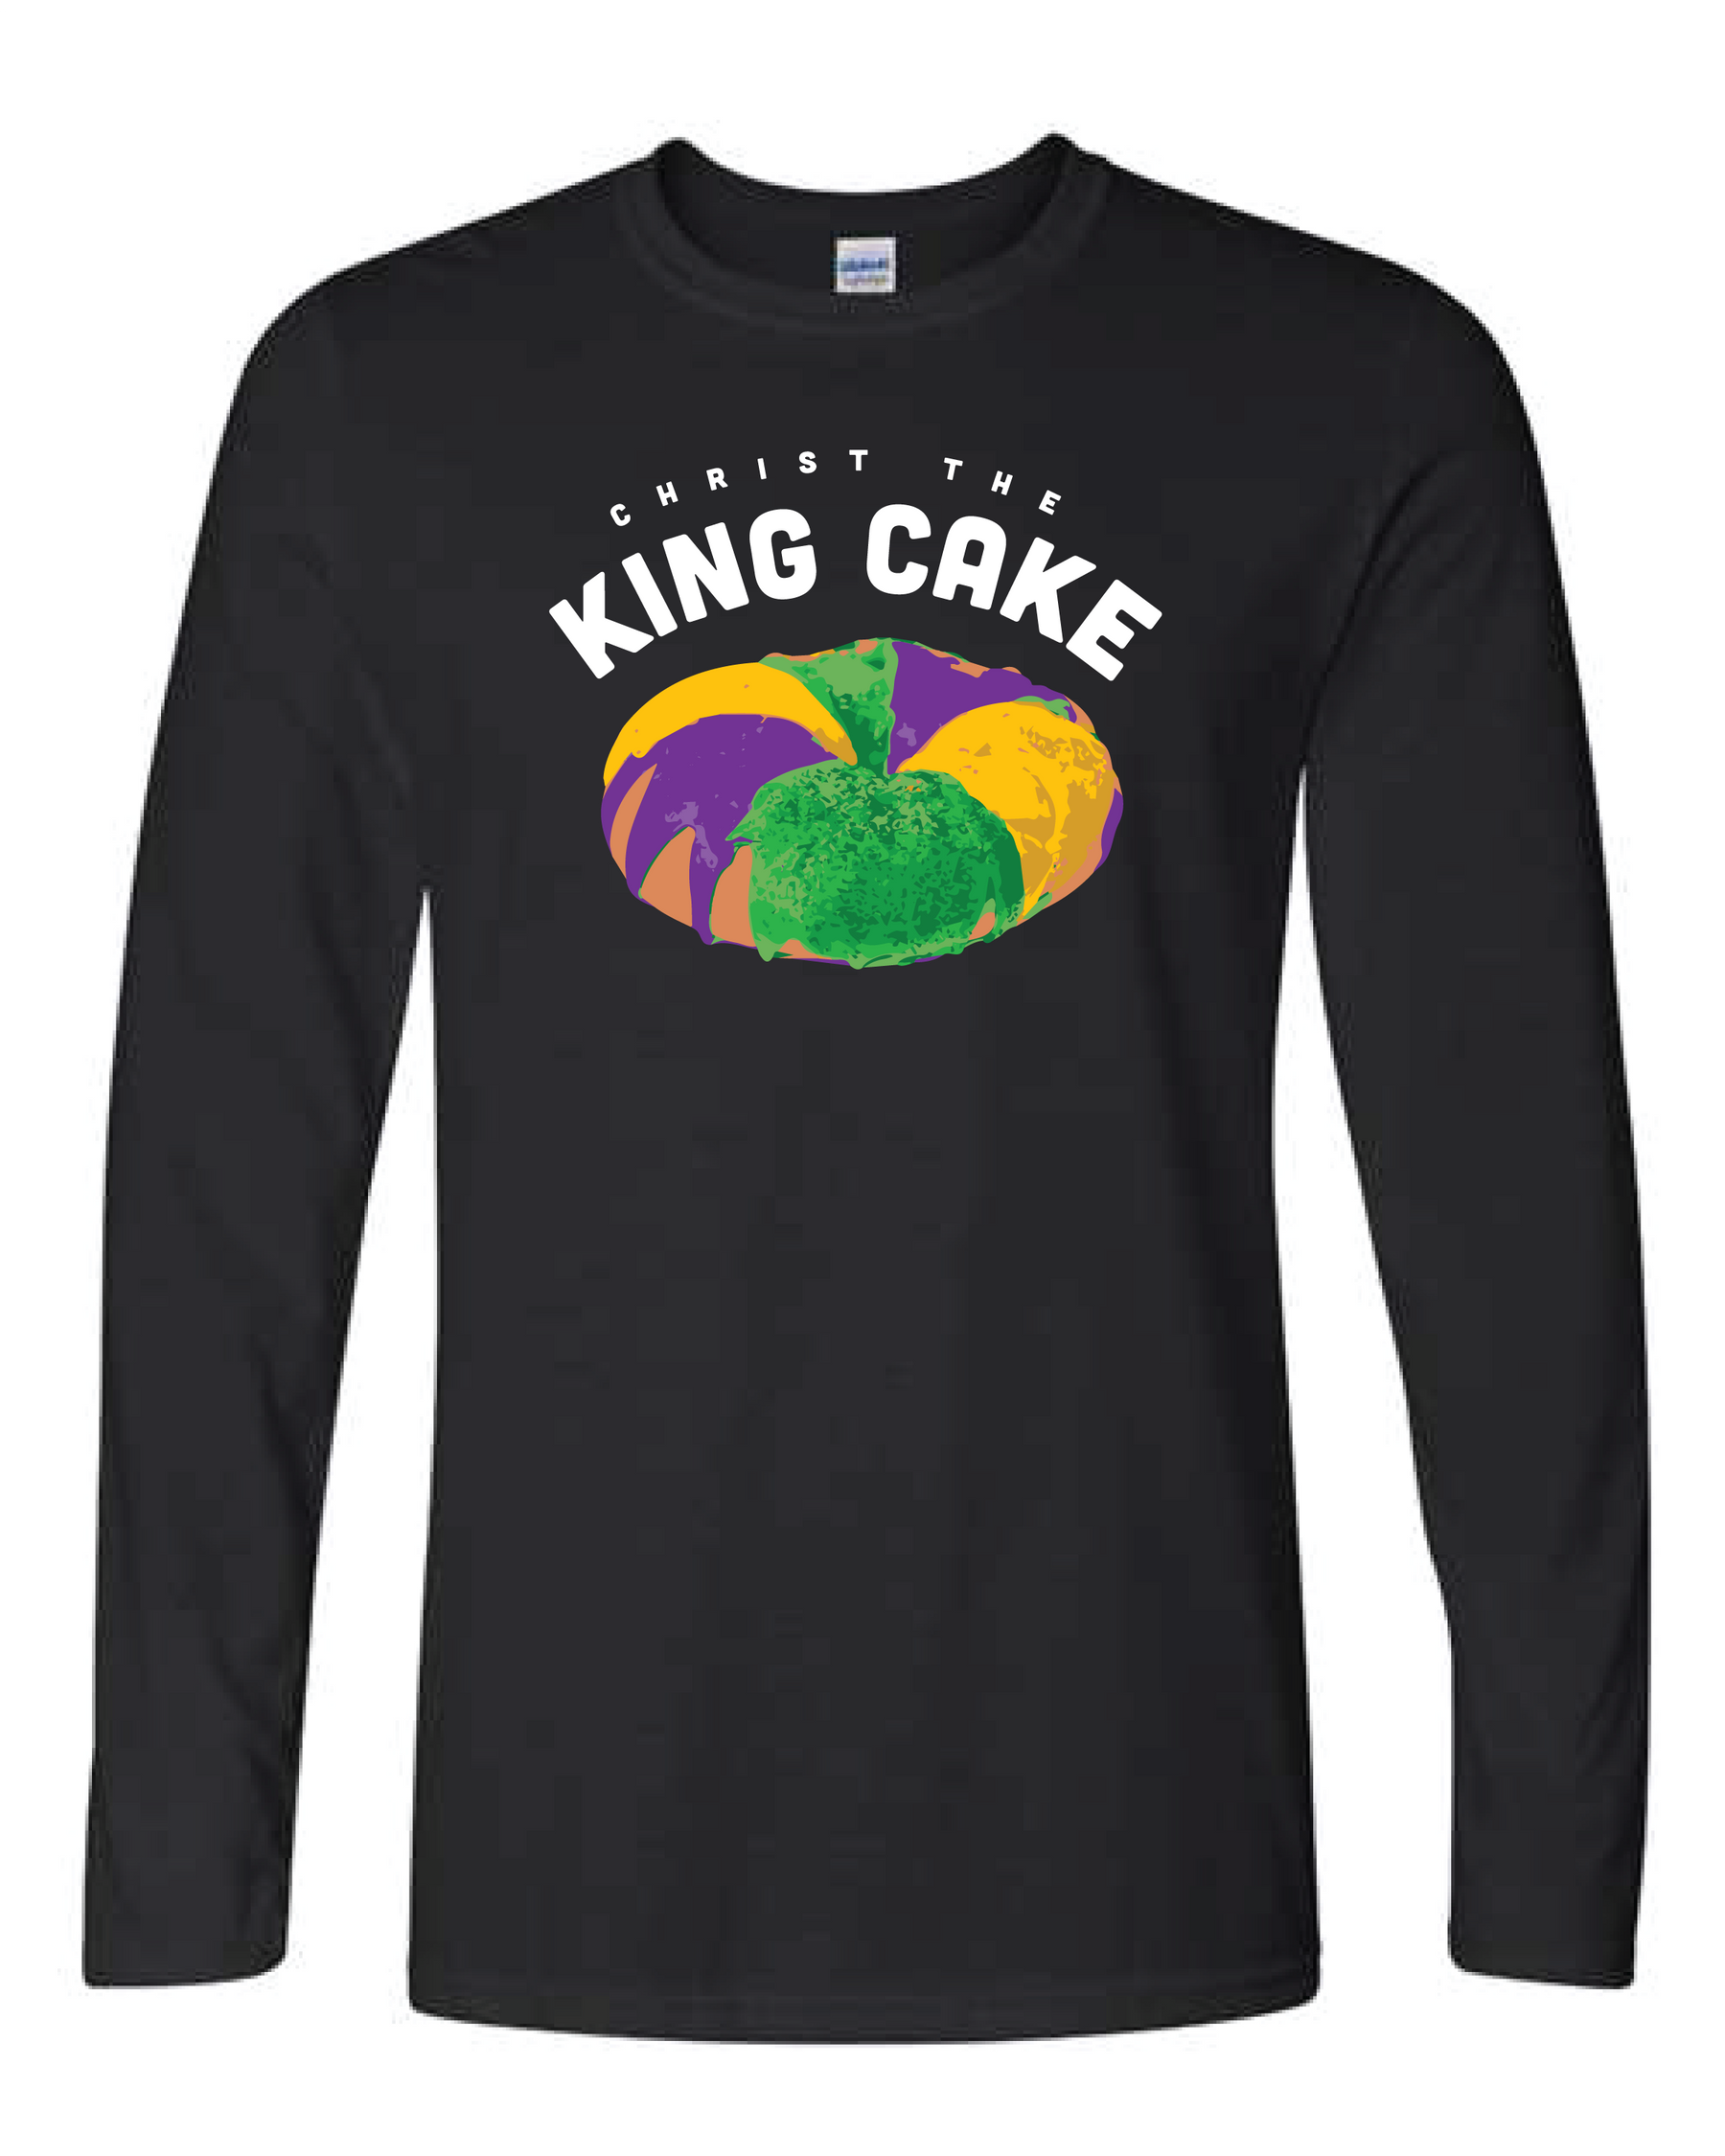 Christ the King Cake Long Sleeve T Shirt